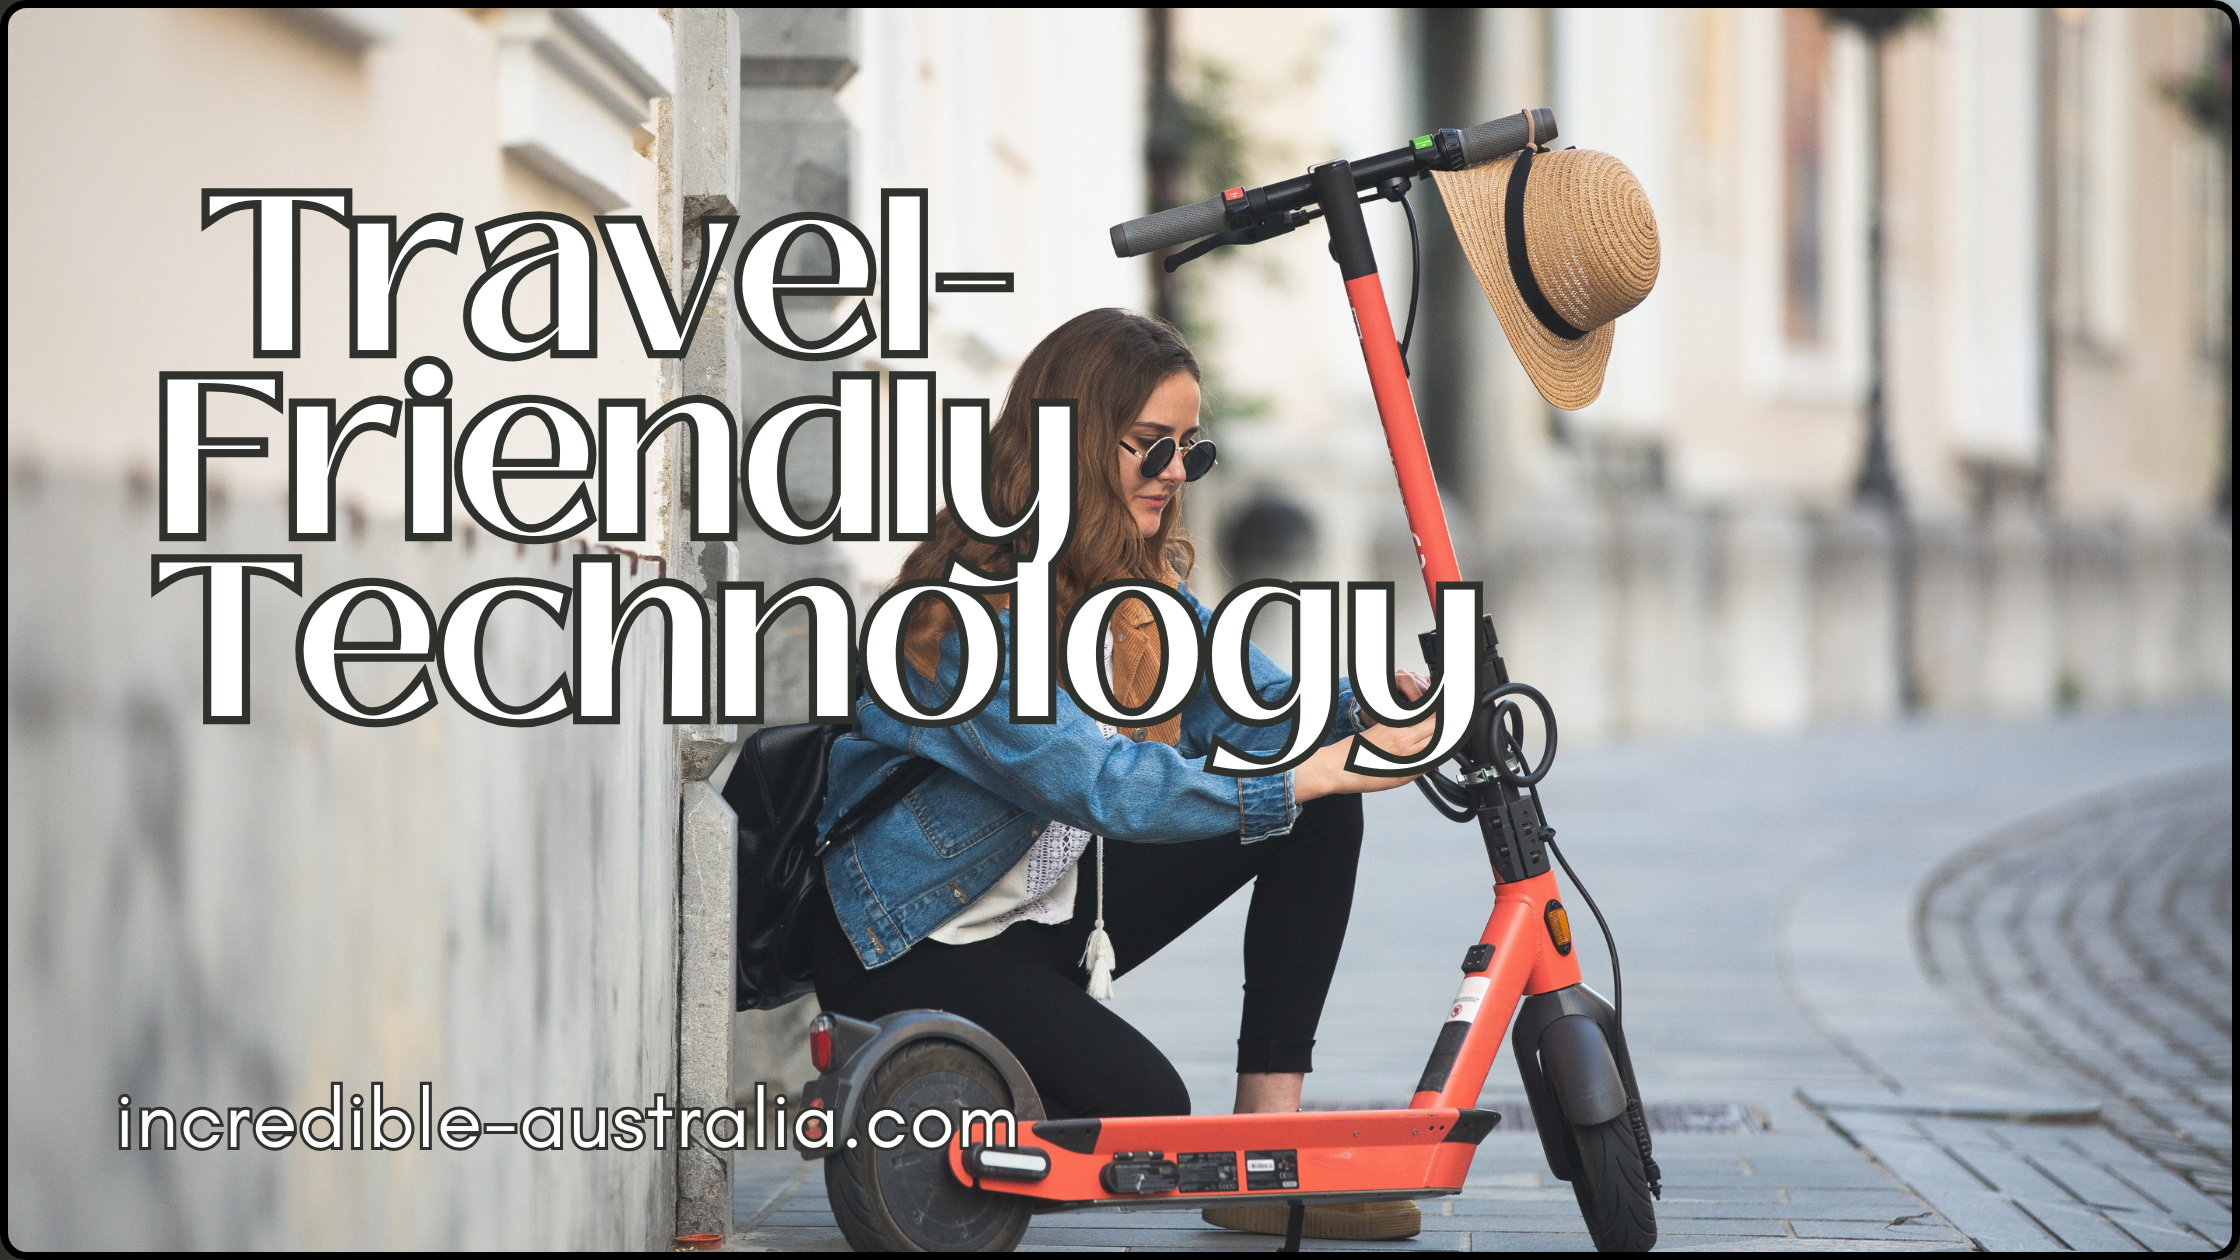 Travel-Friendly Technology